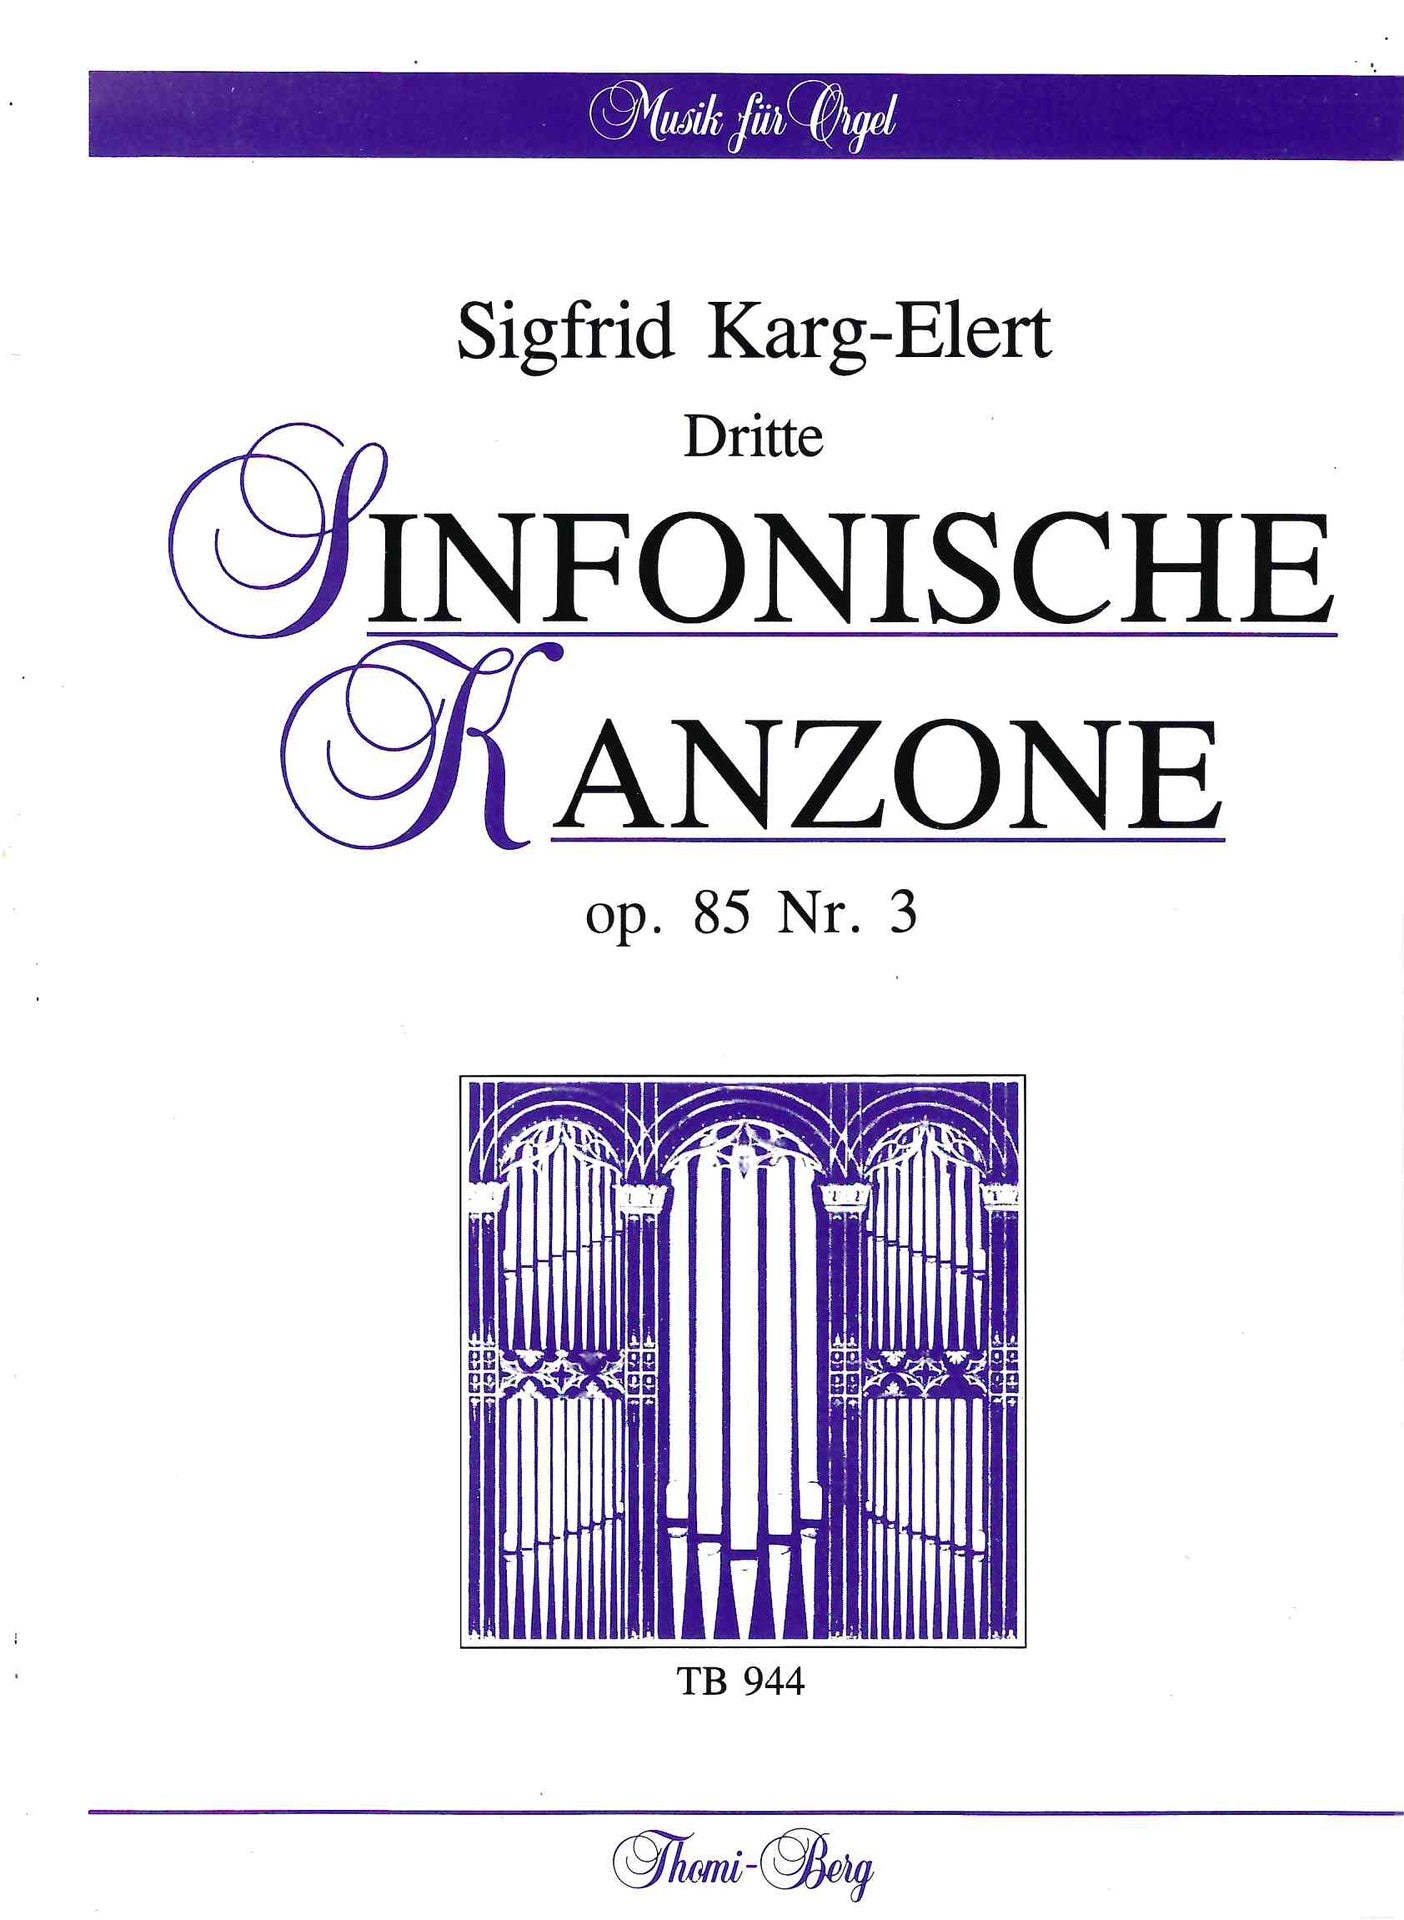 Karg-Elert - Sinfonische Kanzone Op85/3 - Organ Thomi-Berg TB944